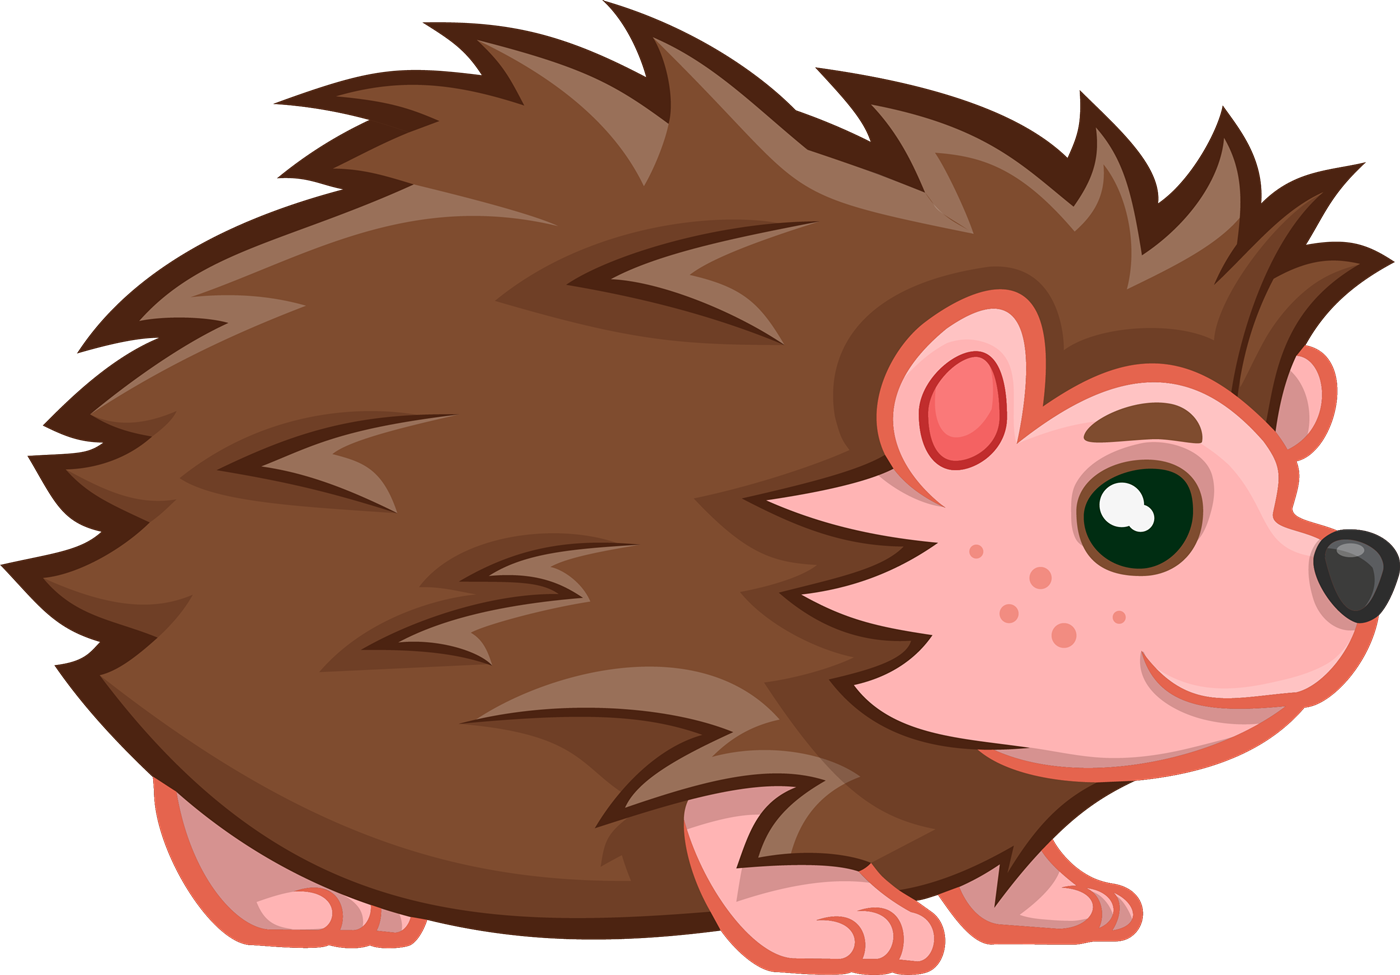 Hedgehog free to use clip art